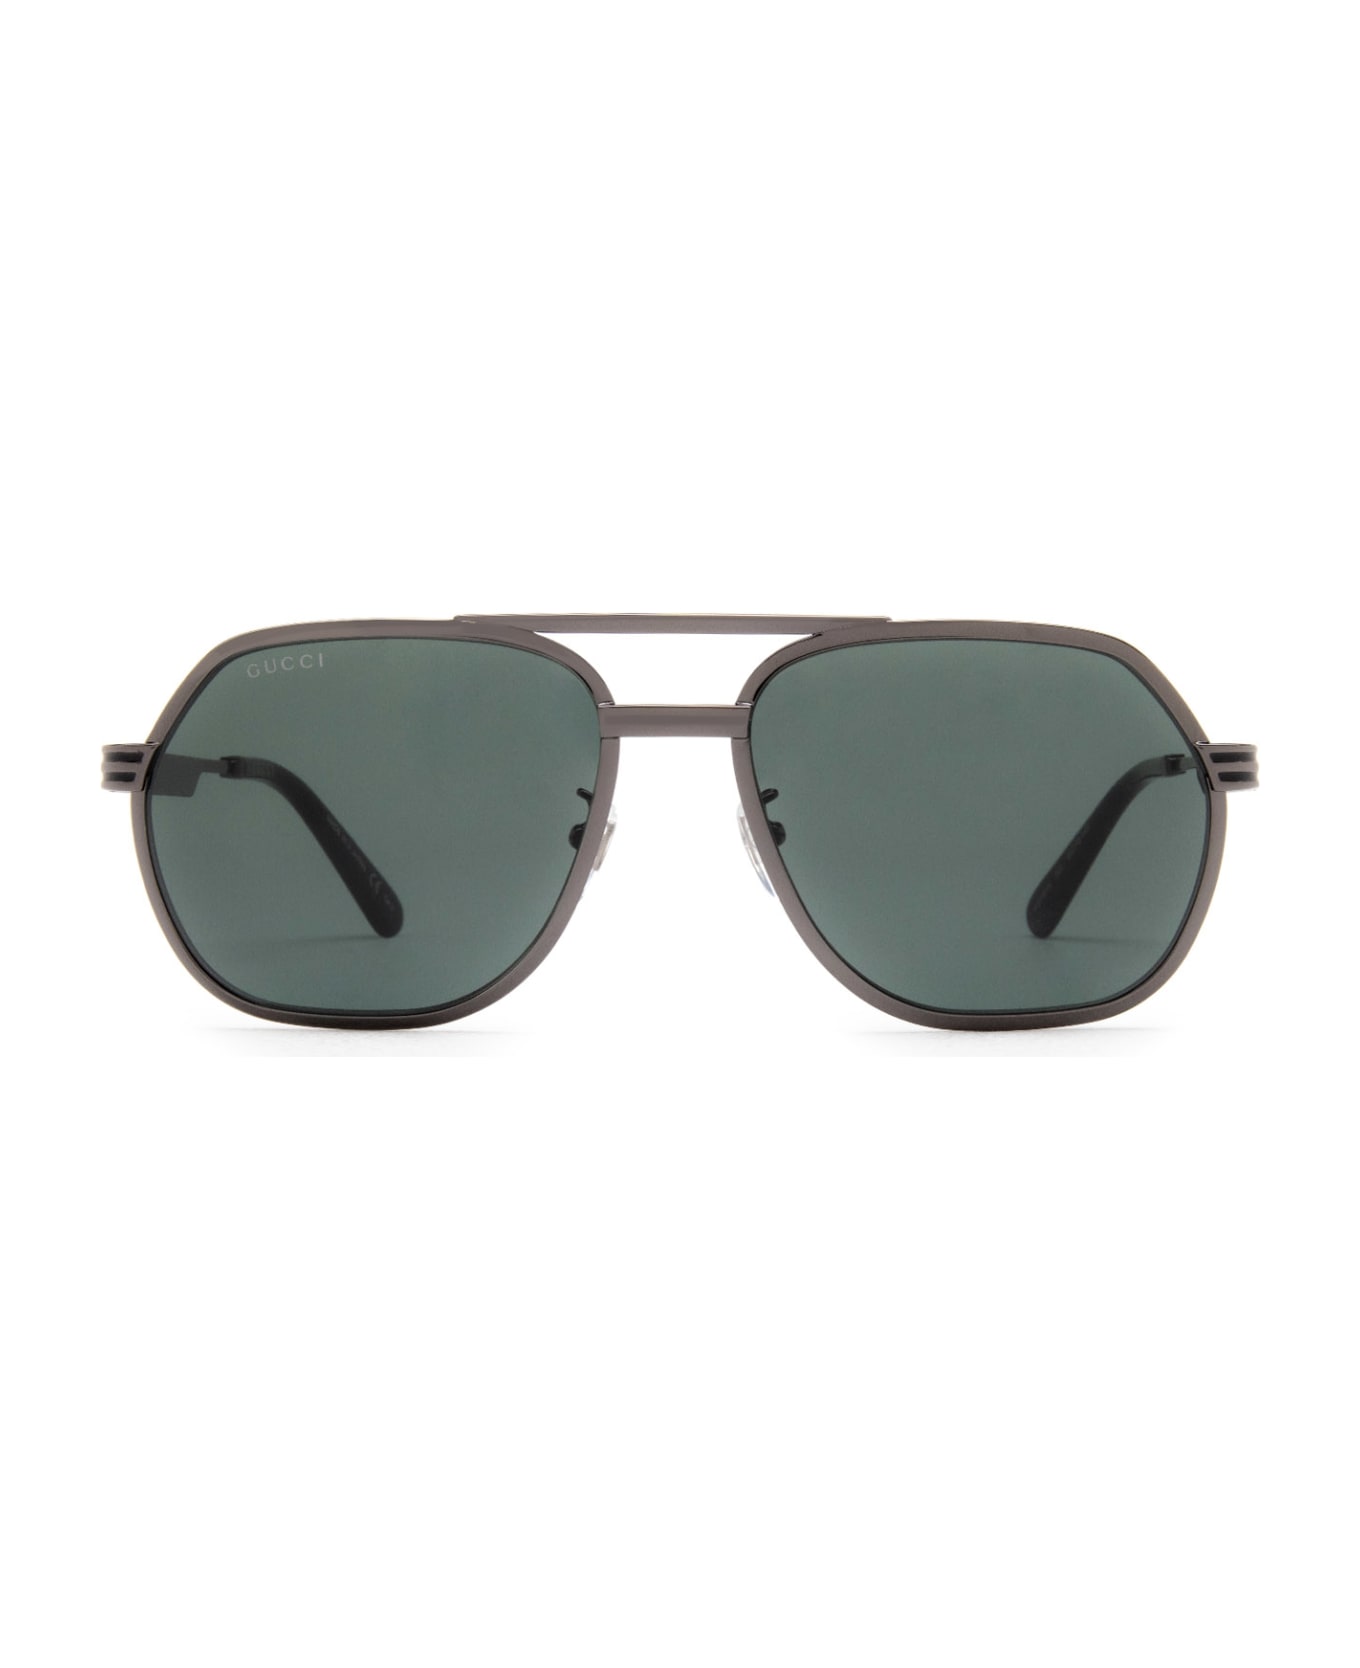 Gucci Eyewear Gg0981s Ruthenium Sunglasses - Ruthenium